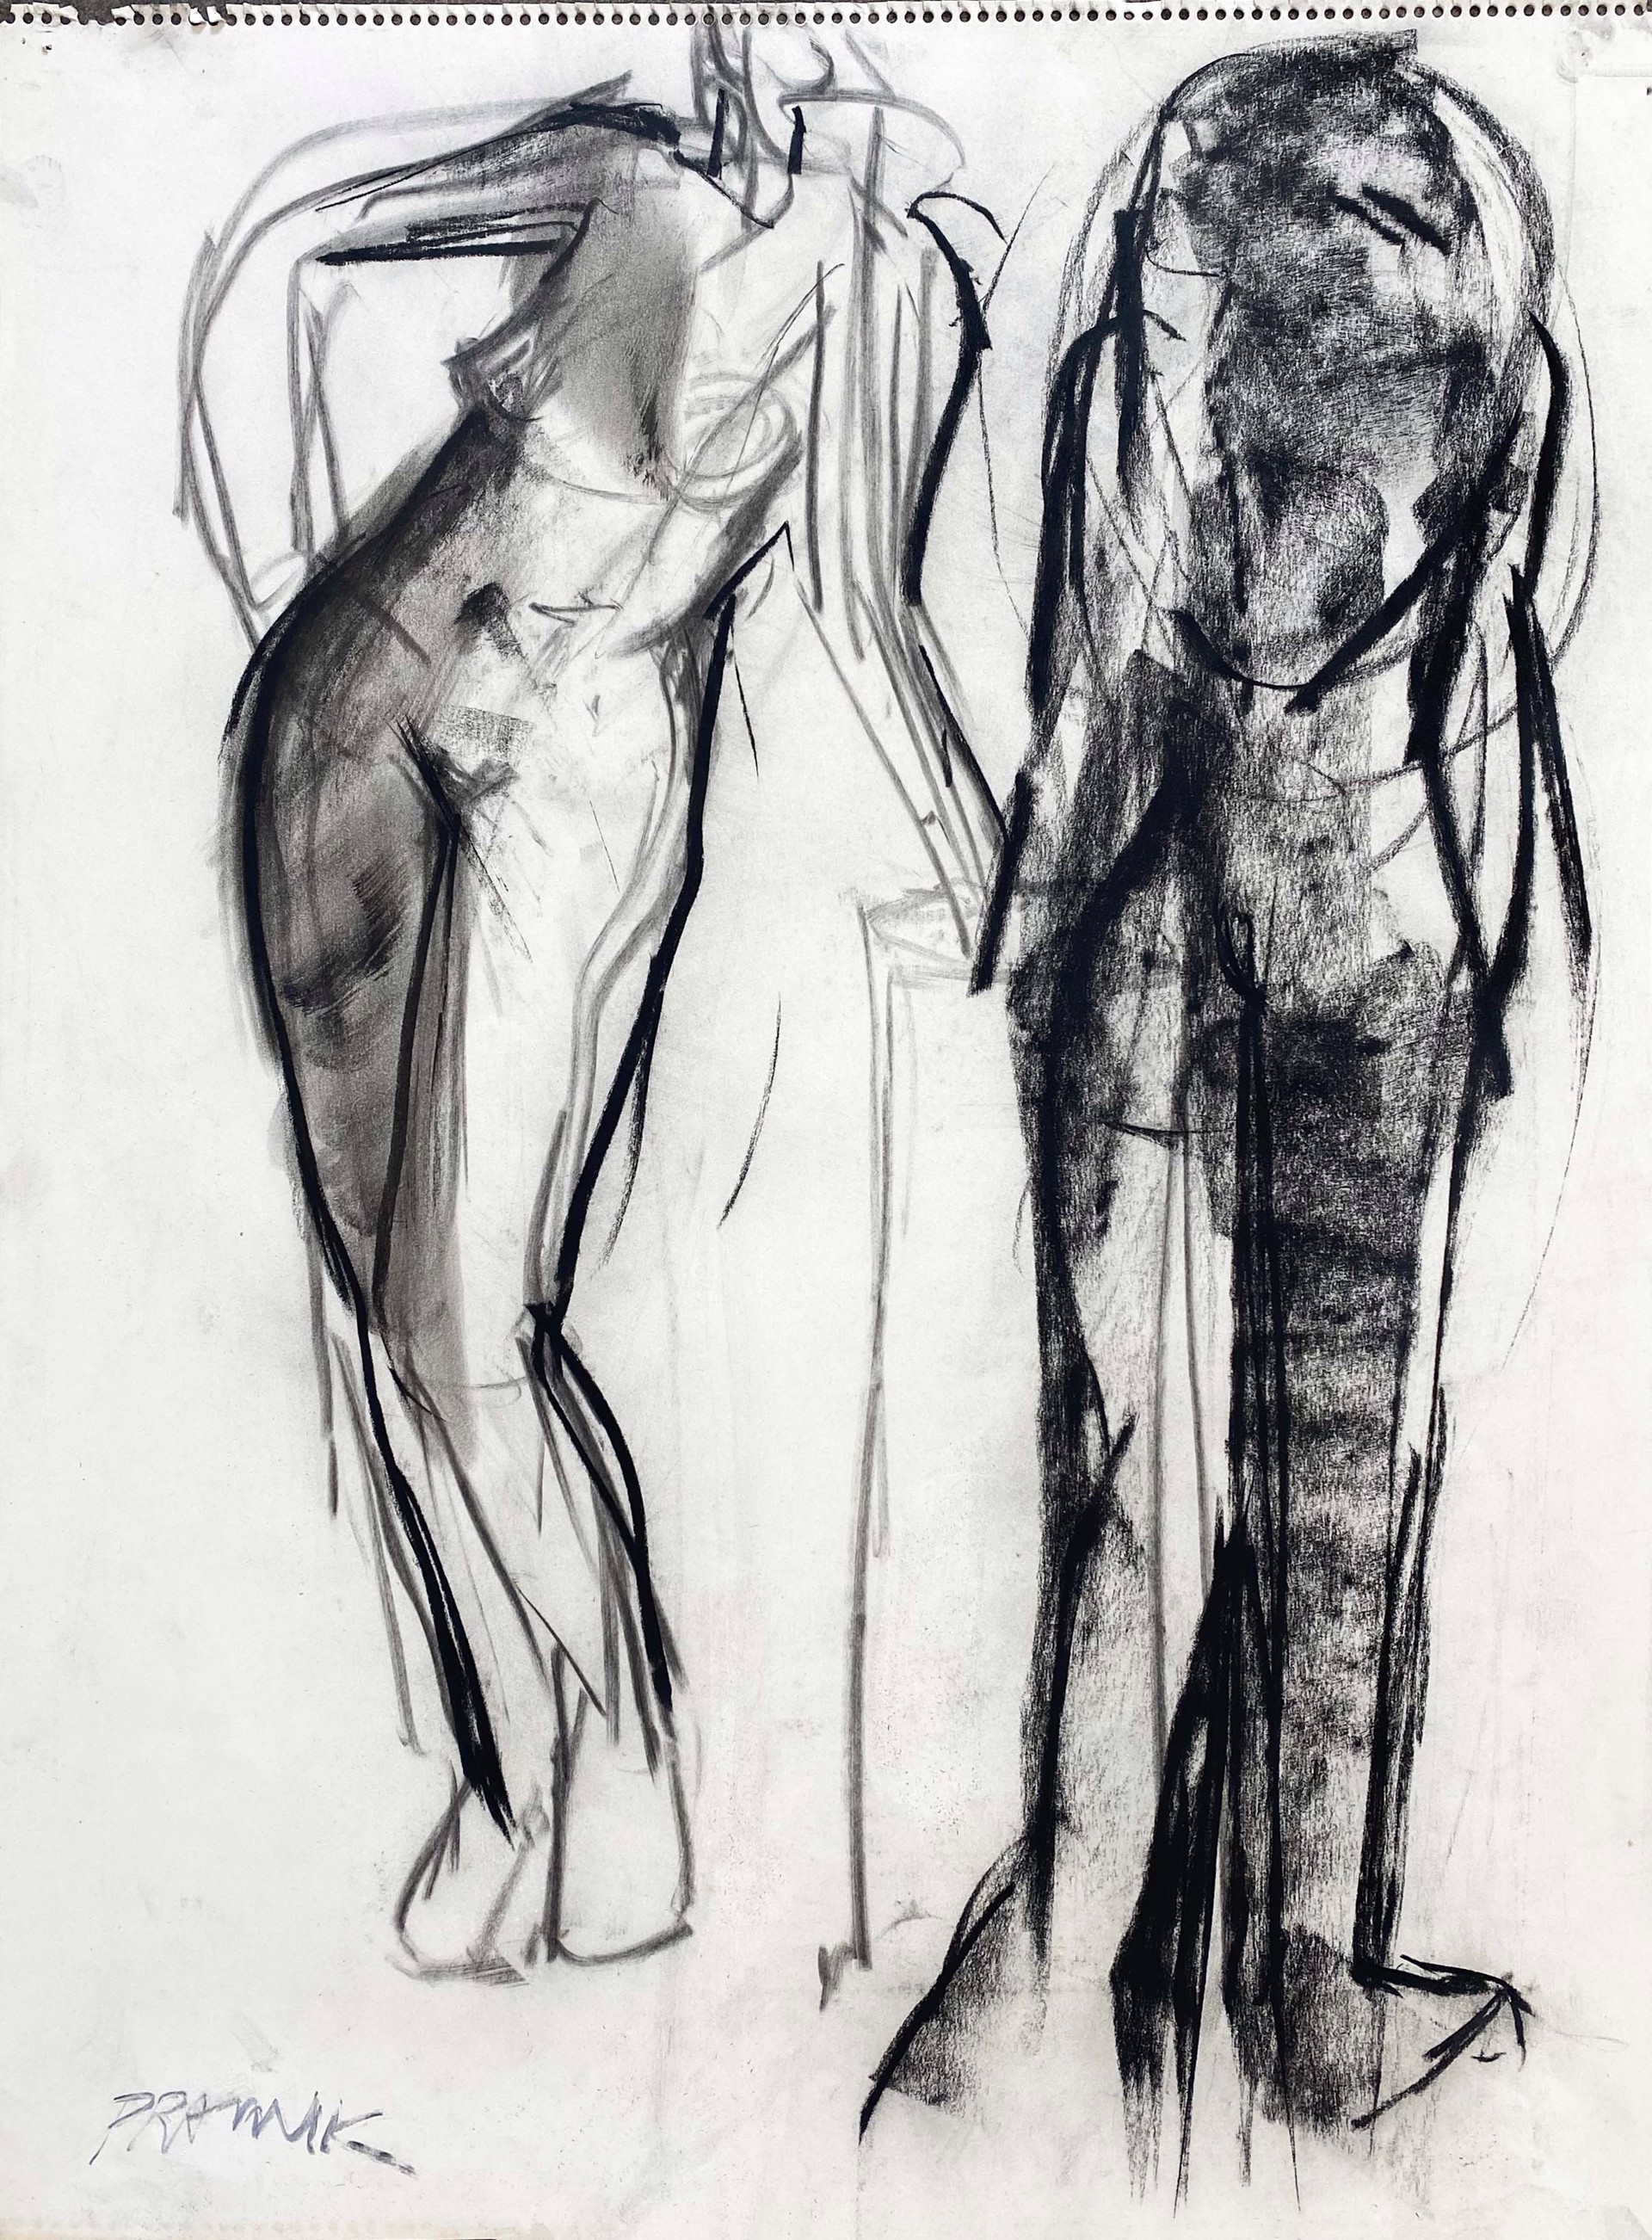 Standing Models by Edward Pramuk